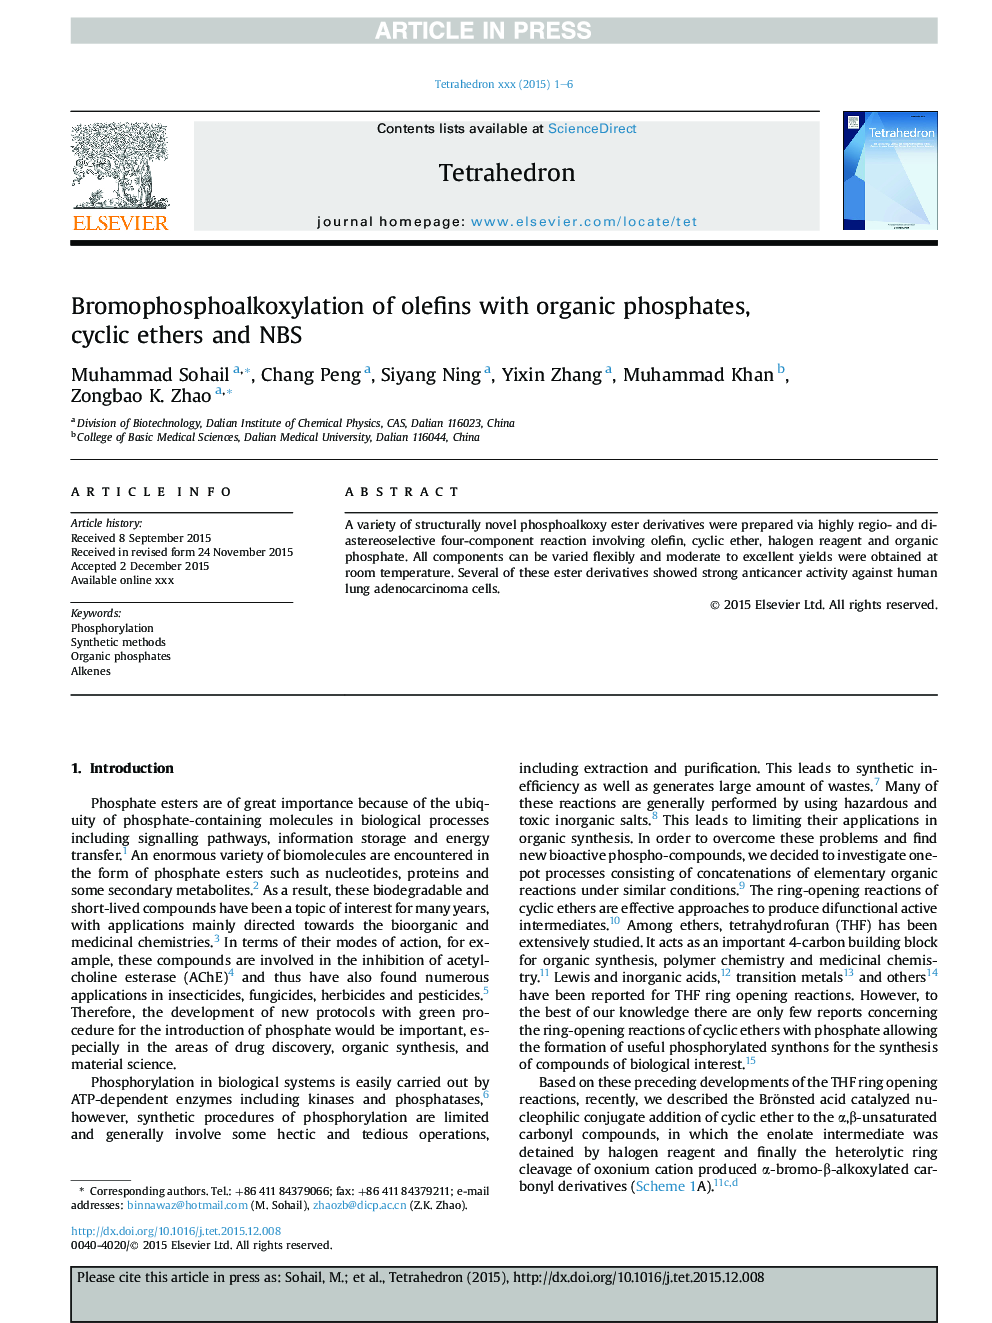 Bromophosphoalkoxylation of olefins with organic phosphates, cyclic ethers and NBS